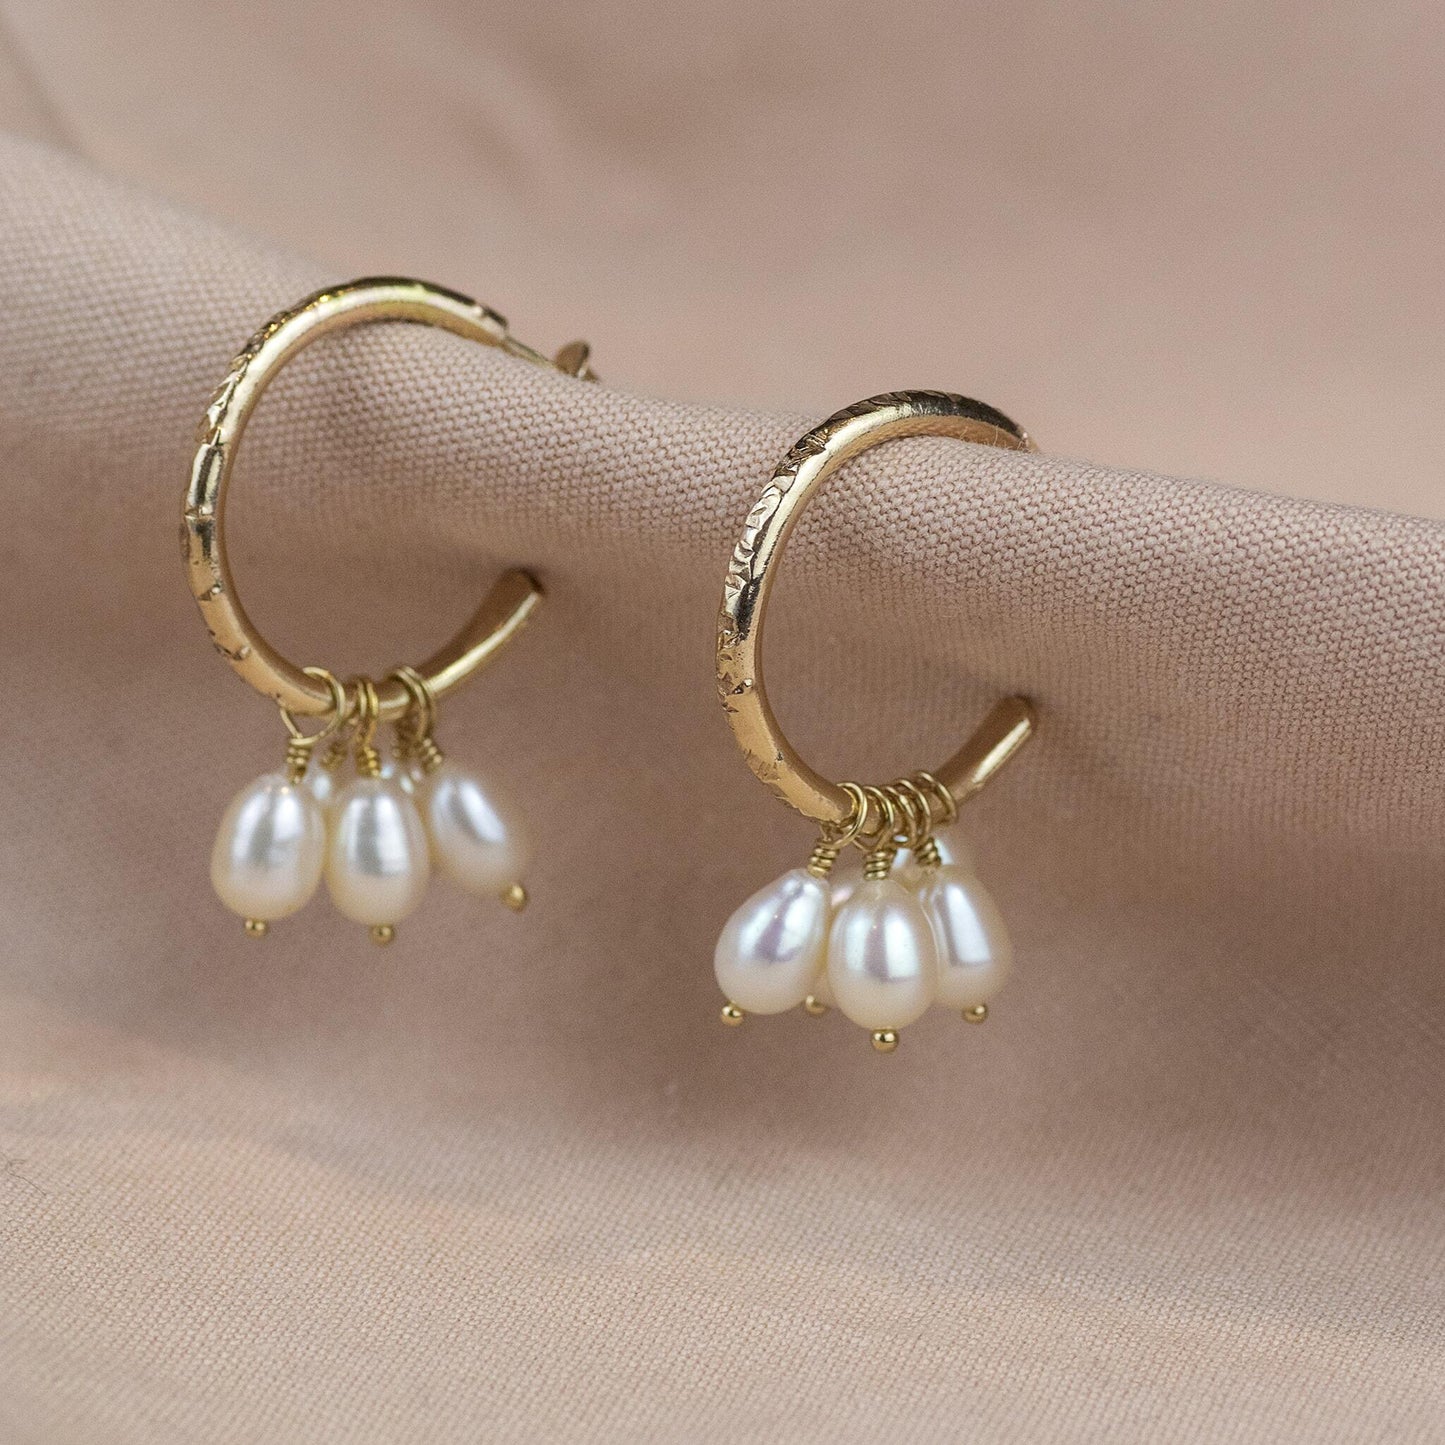 Bridal Earrings - Petite Gold Hoops with Pearl Cluster - 2cm